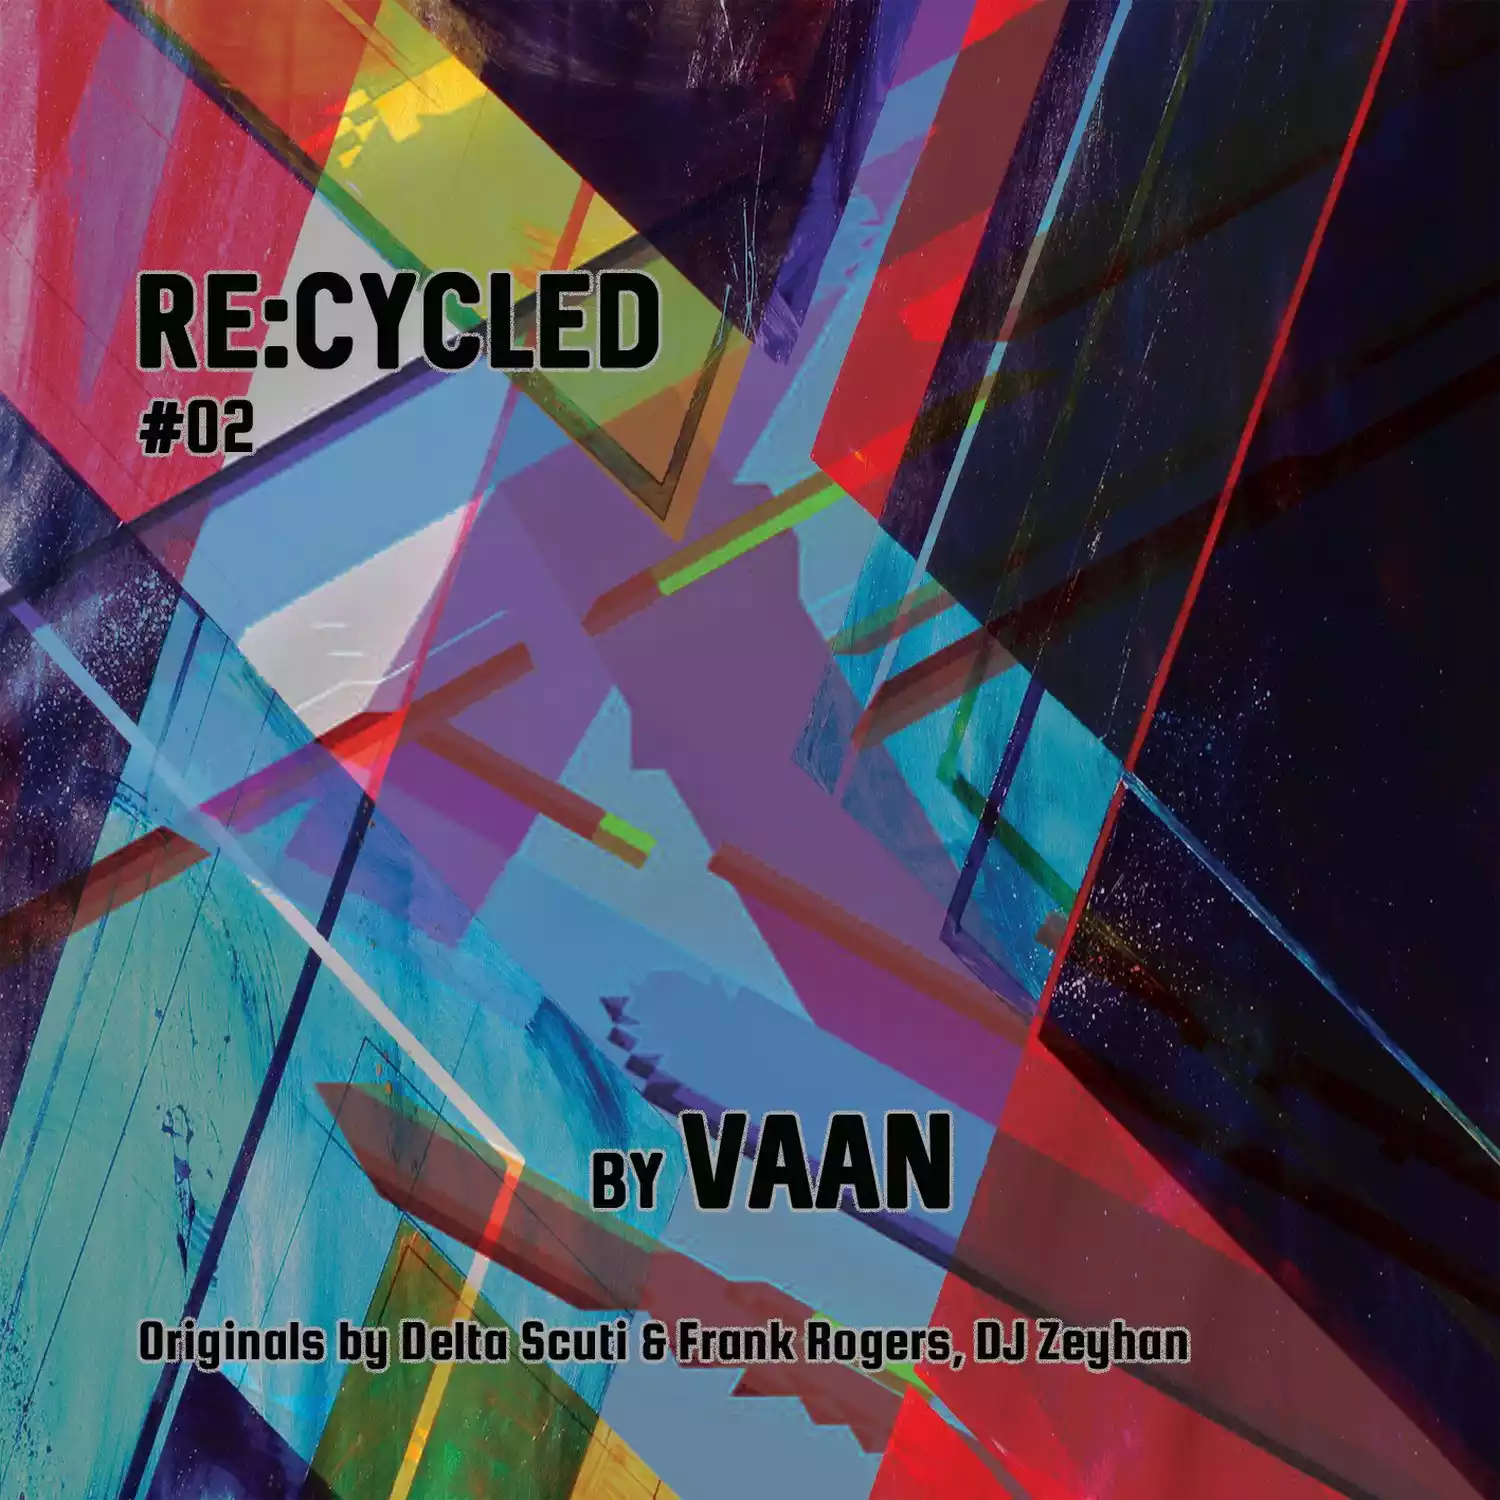 BFFR048 - Vaan -RE:CYCLED #02